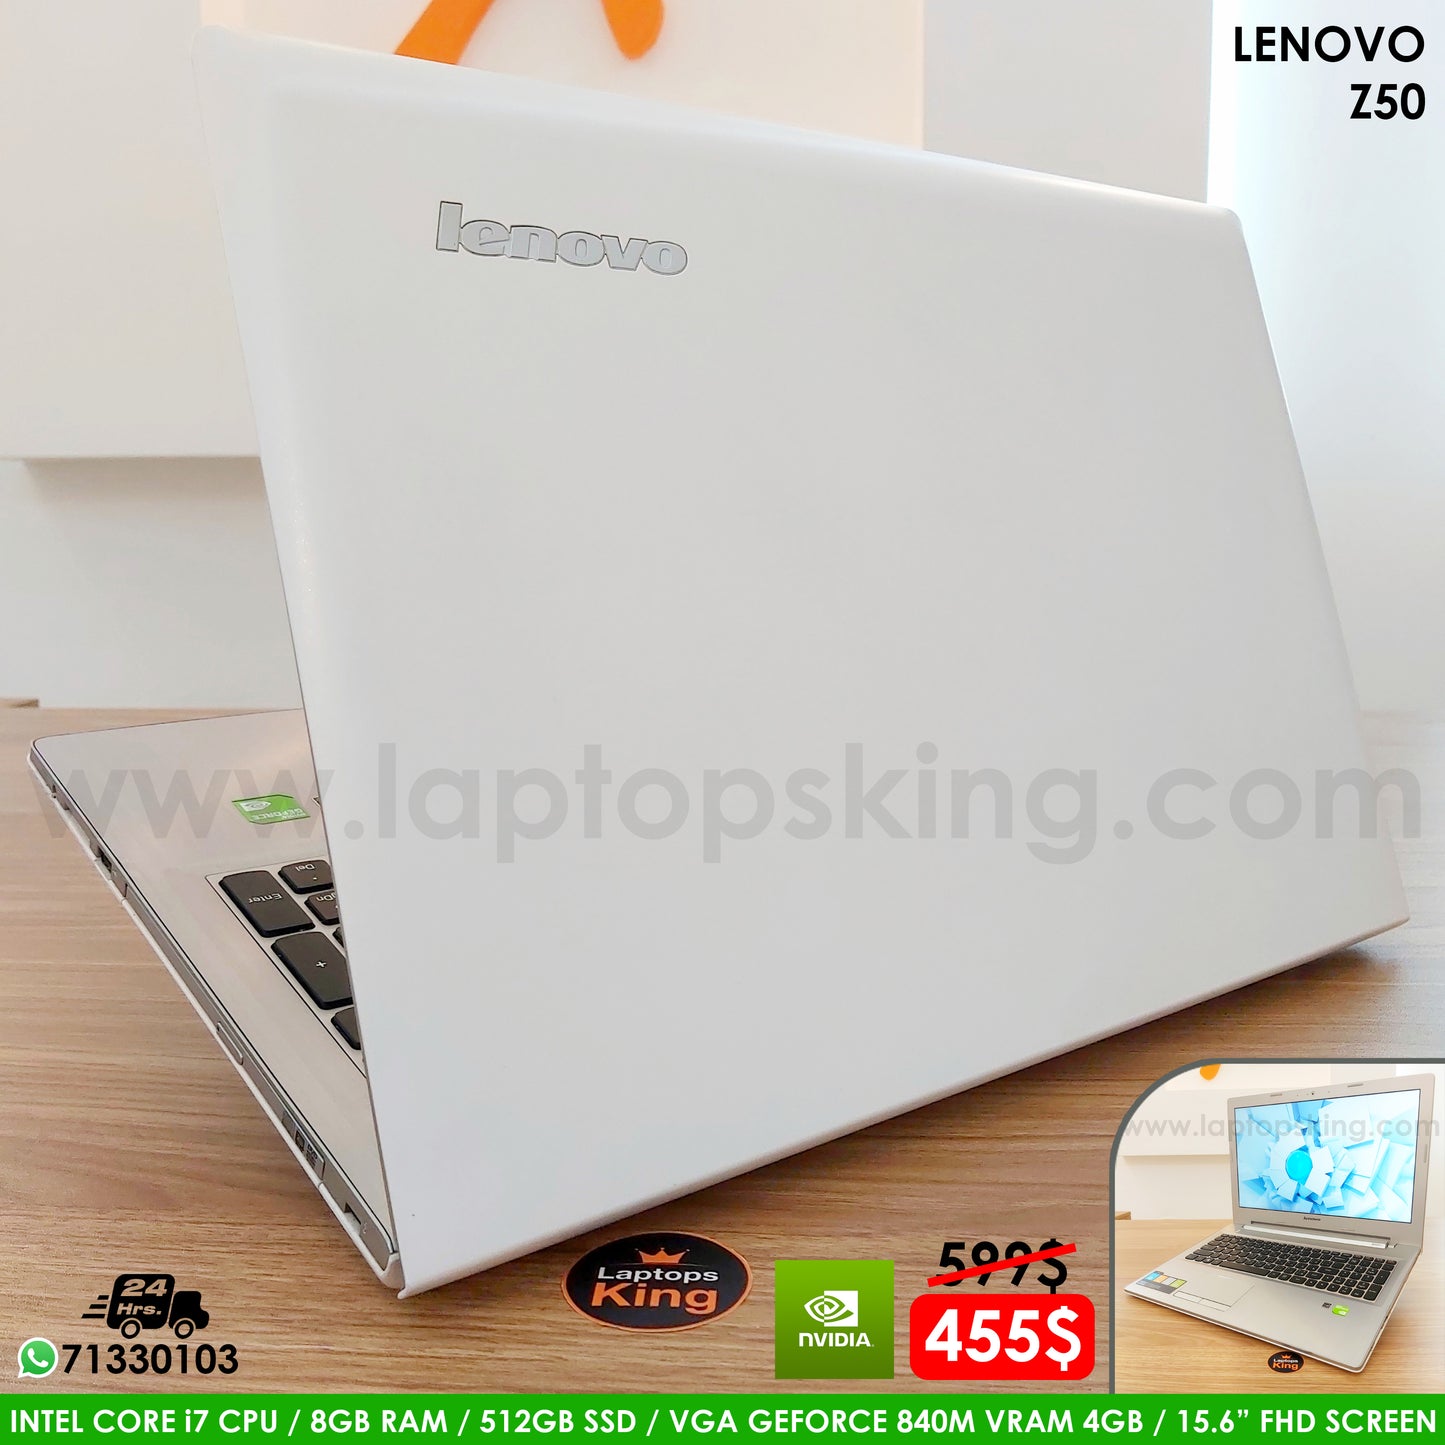 Lenovo Z50 i7 Geforce 840M 4gb Laptop (Used Very Clean)